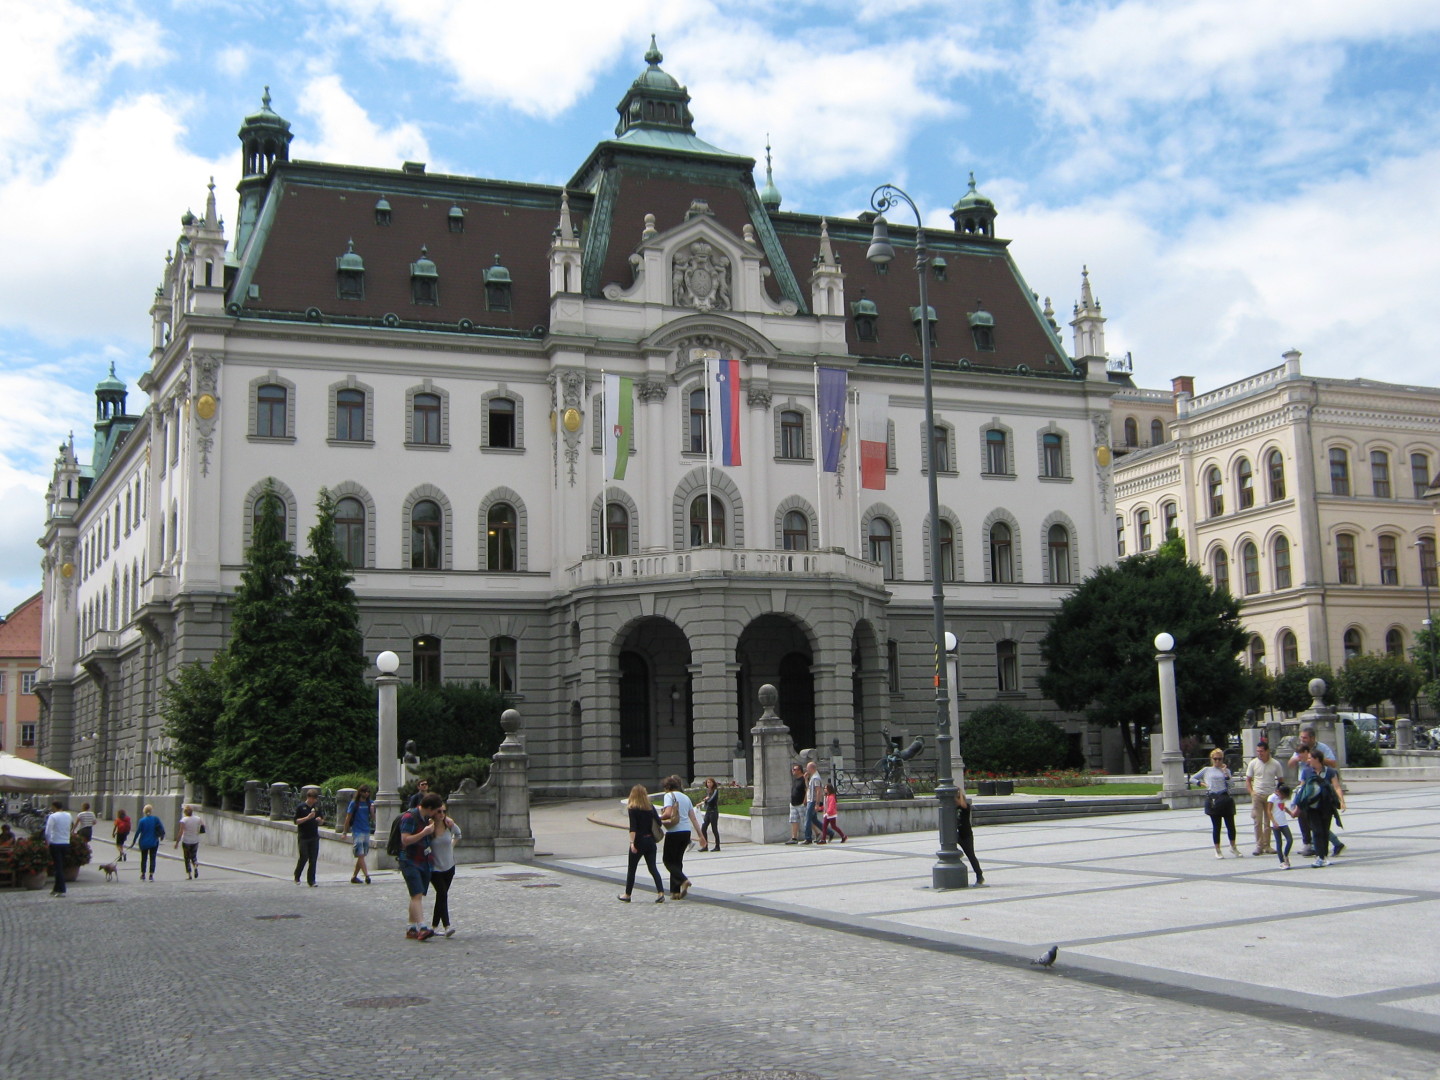 The main building of the University of Ljubljana